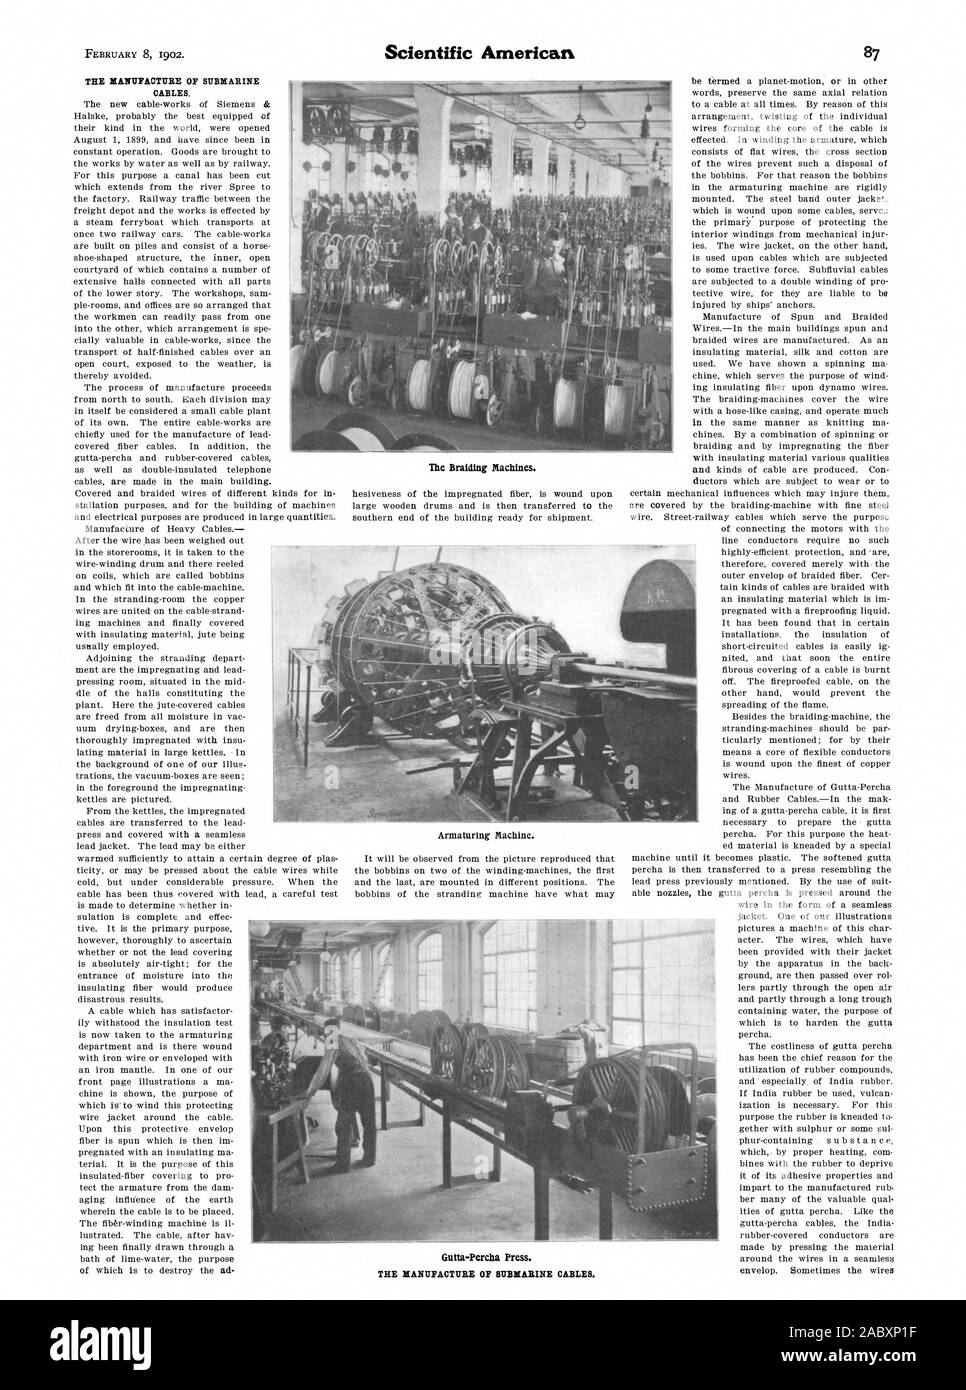 The Braiding Machines. Armaturing Machine. THE MANUFACTURE OF SUBMARINE CABLES., scientific american, 1902-02-08 Stock Photo